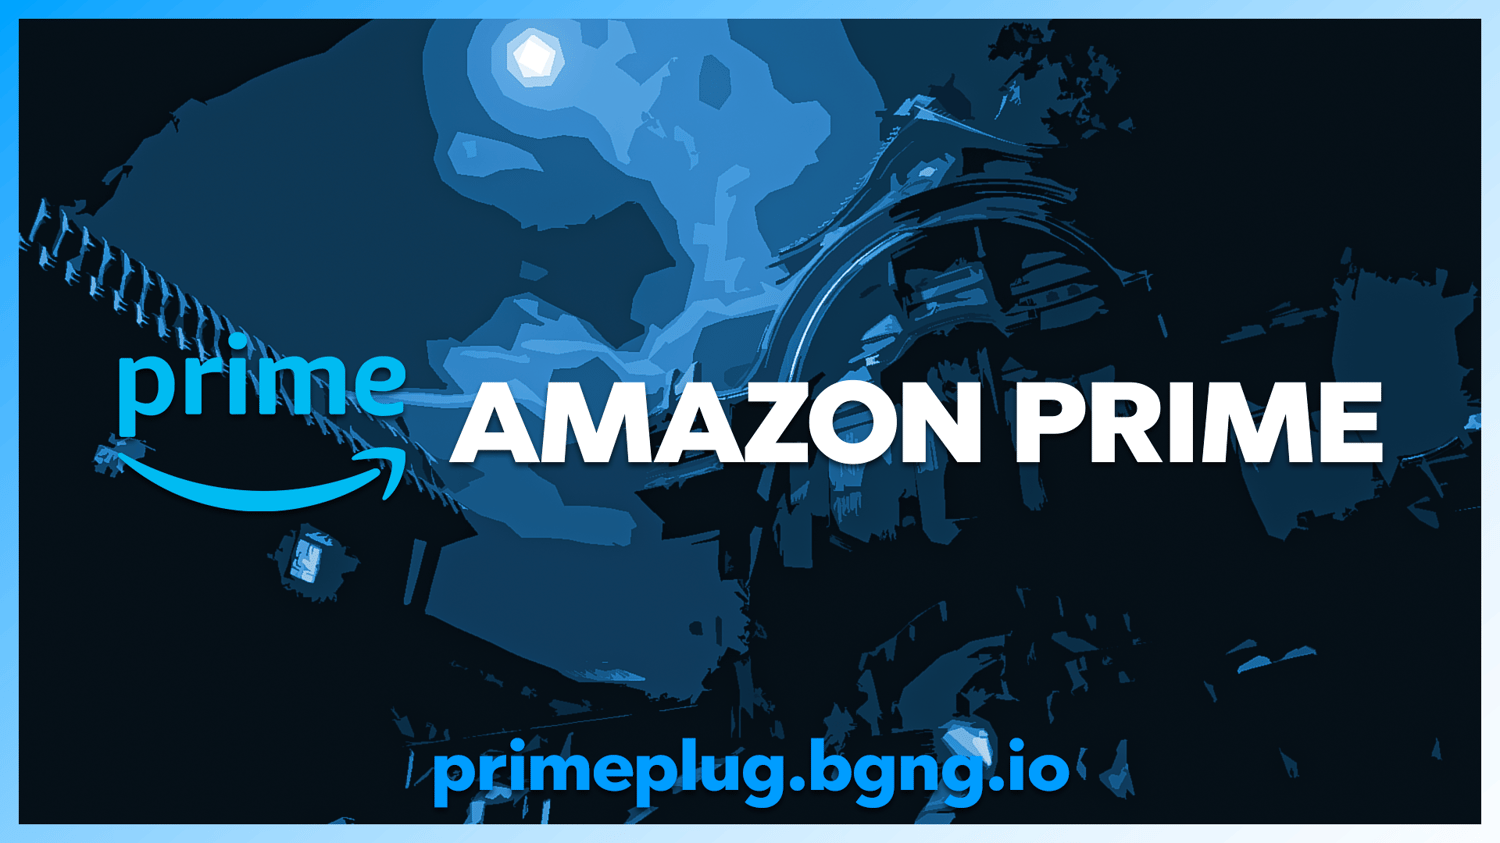 Amazon Prime Full Acces - 1 Year